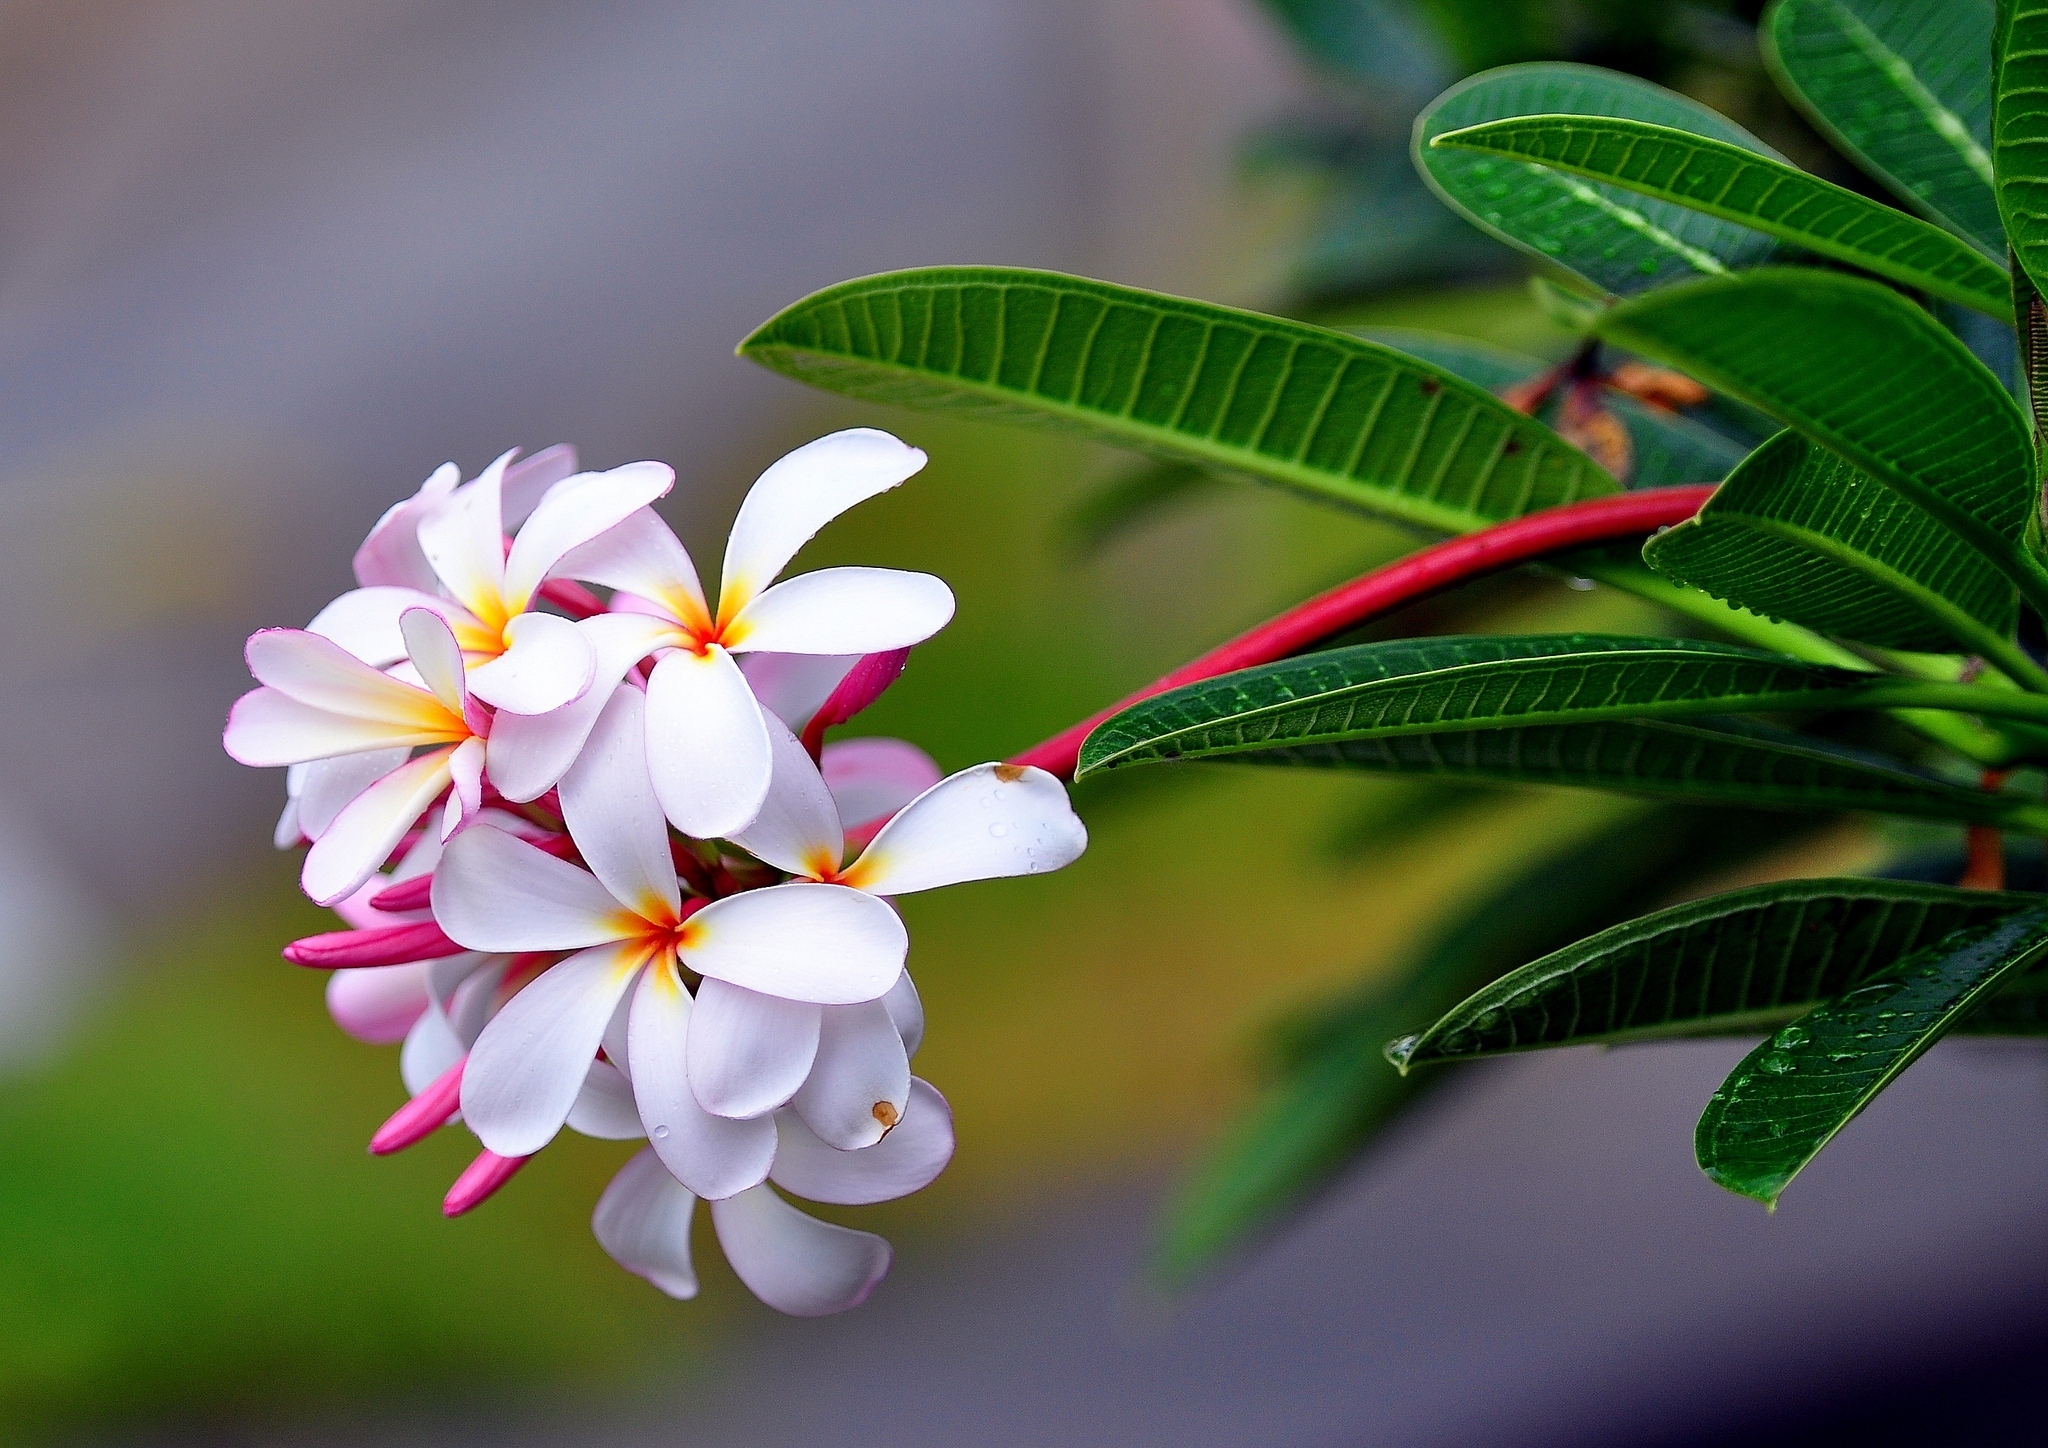 276193 descargar imagen flor, flores, tierra/naturaleza, frangipani: fondos de pantalla y protectores de pantalla gratis